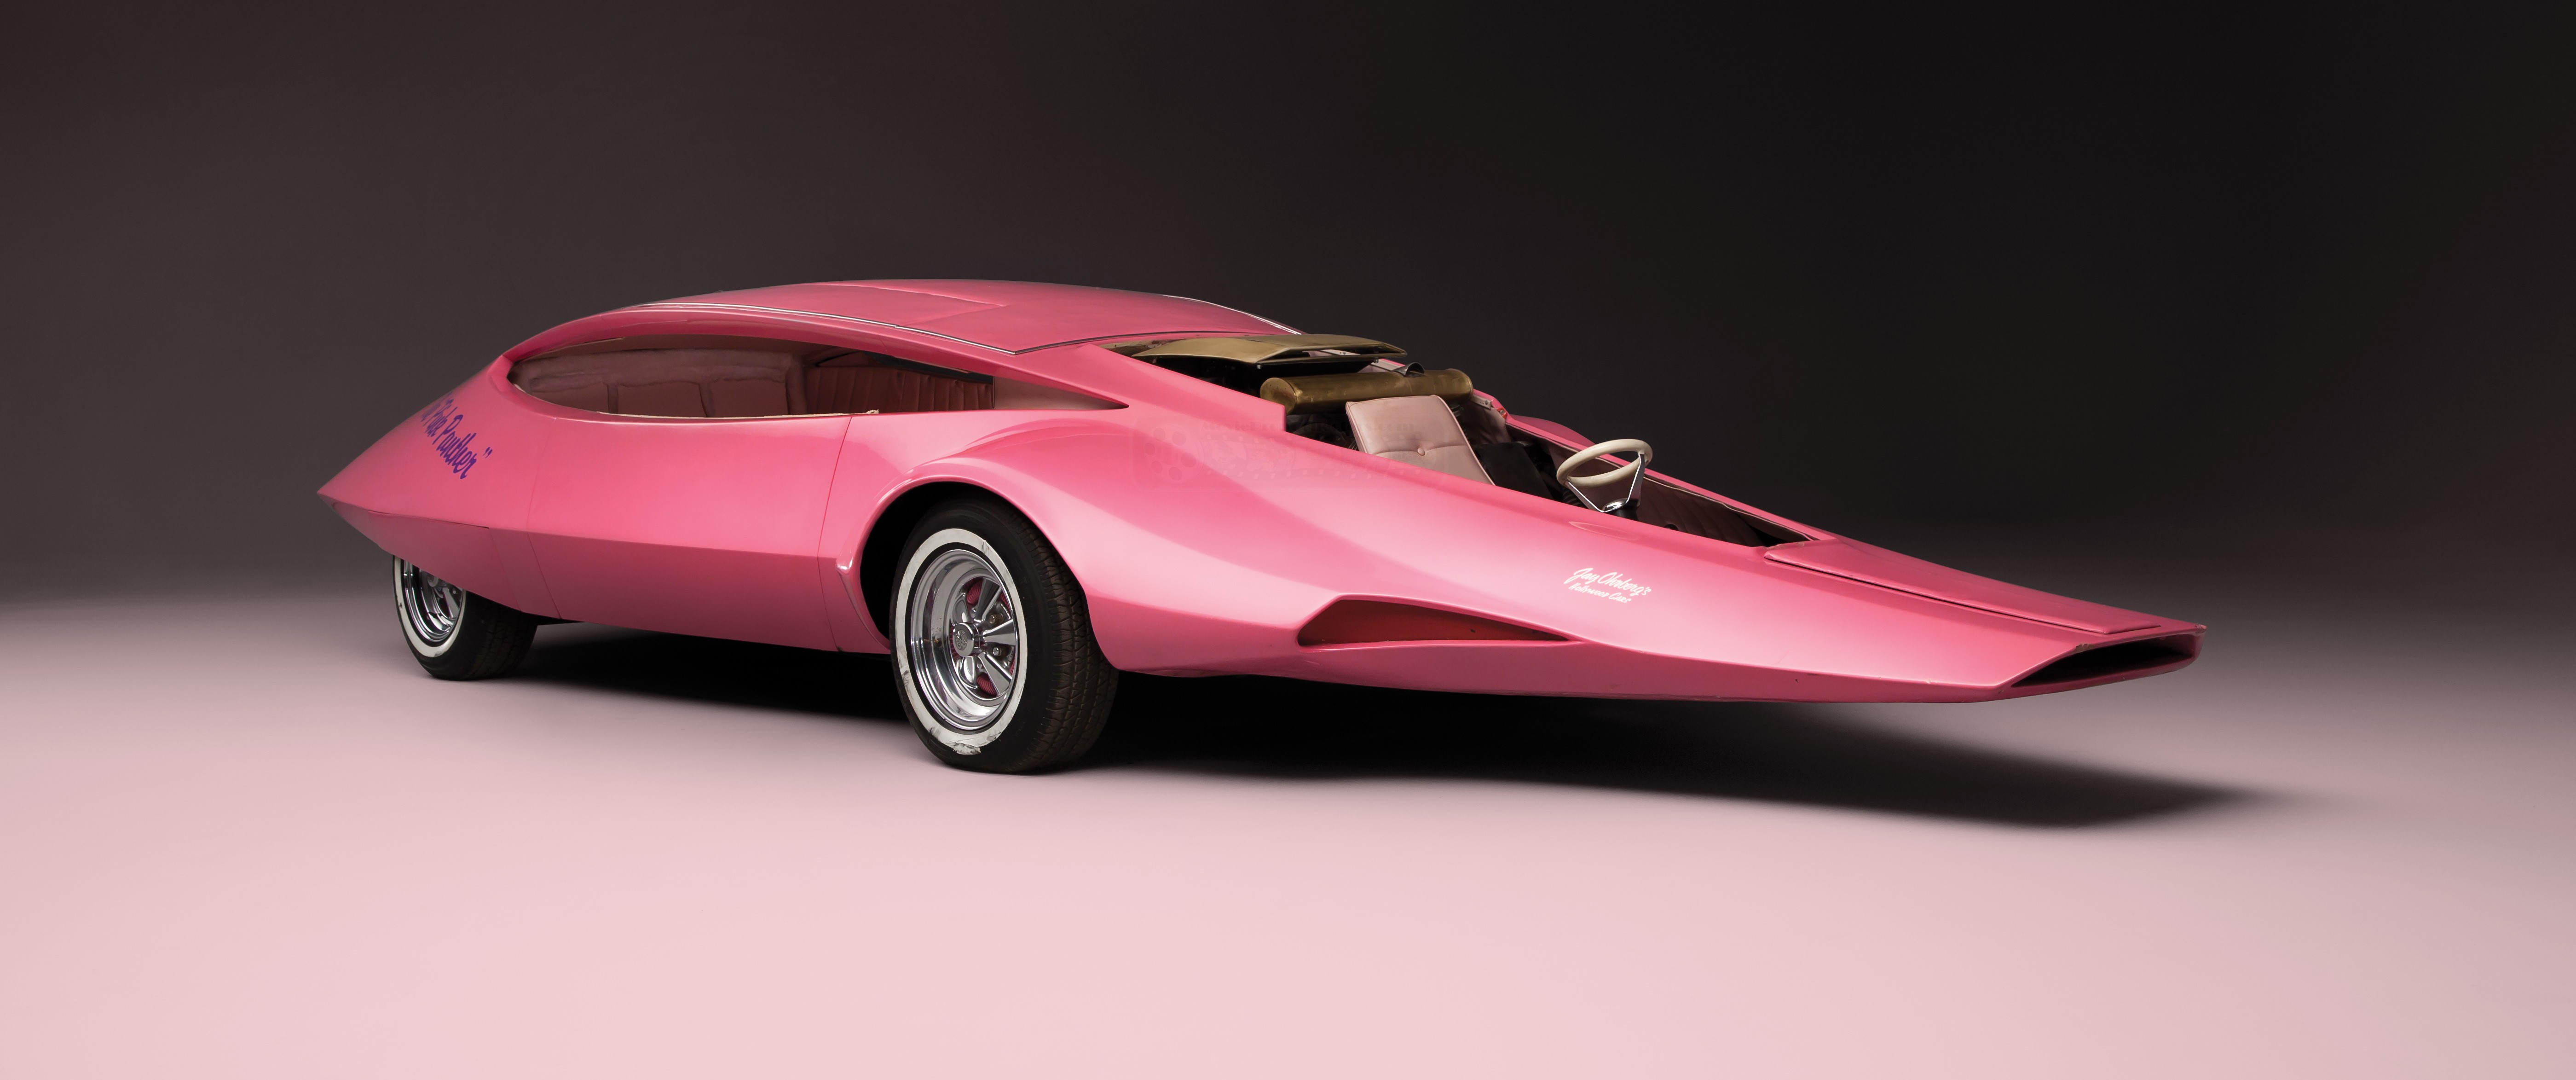 Car Pink Vehicle Pink Cars 5598x2346